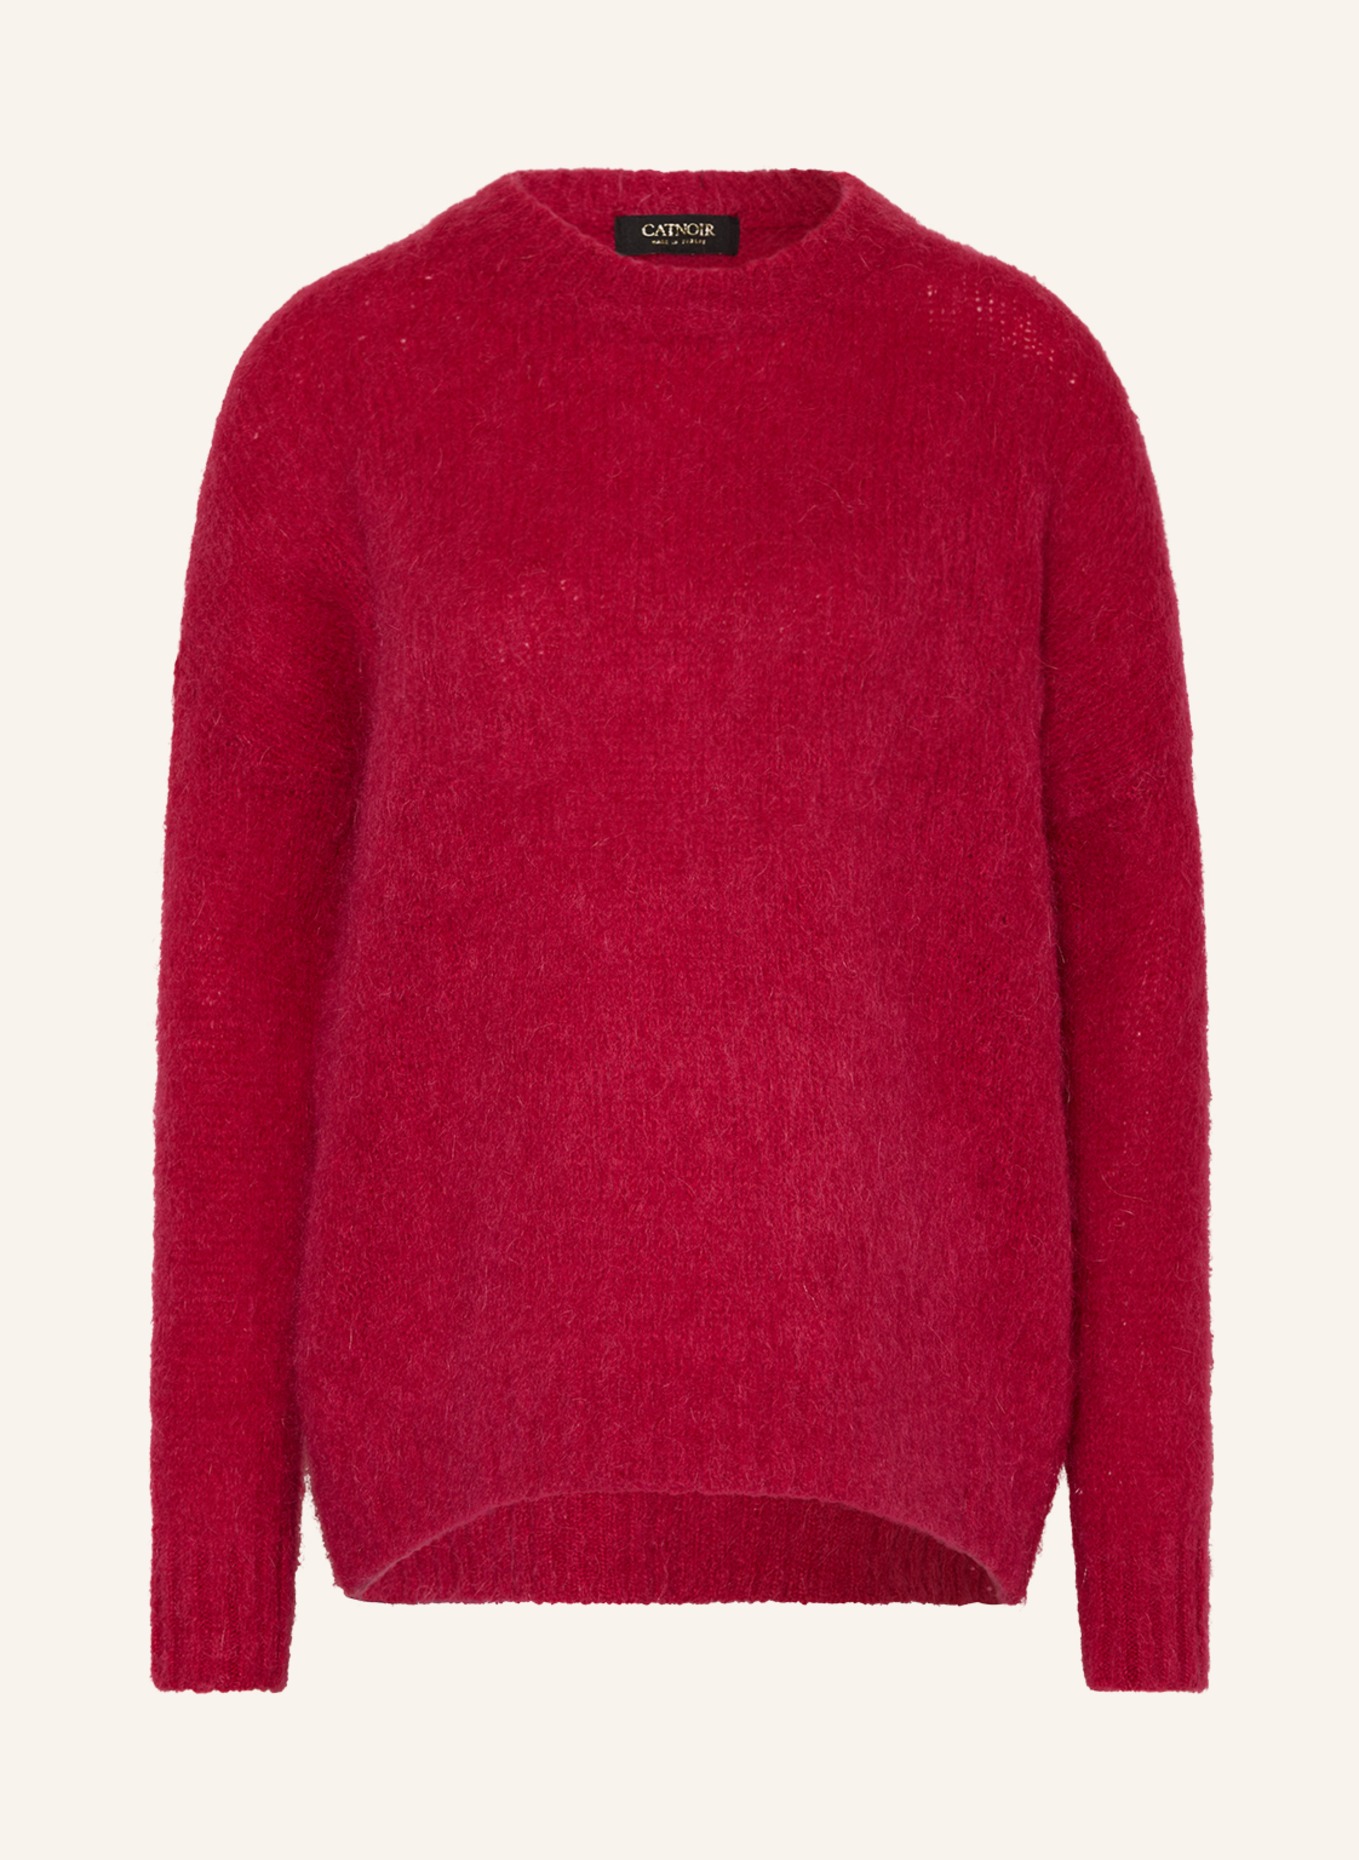 CATNOIR Pullover, Farbe: PINK (Bild 1)